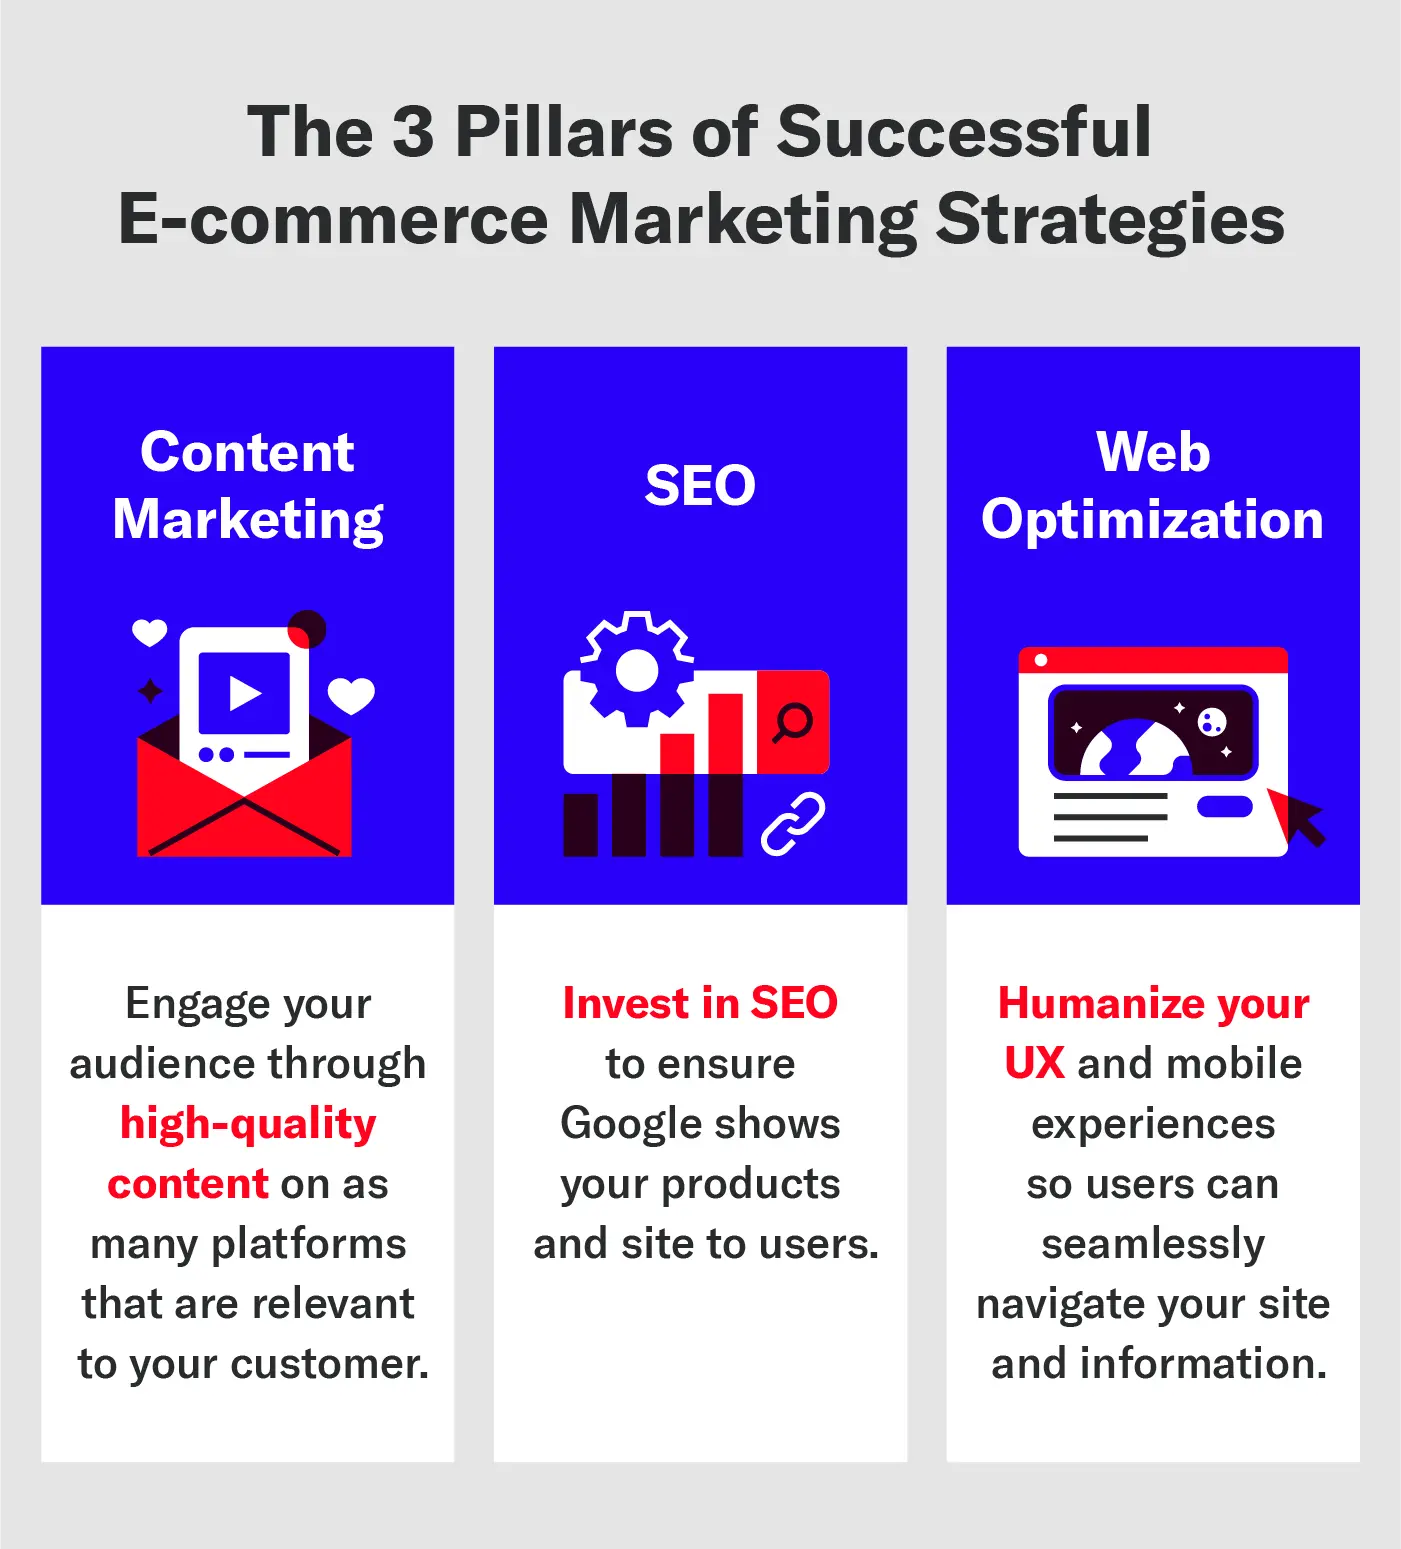 An image displaying the three pillars of e-commerce marketing strategies